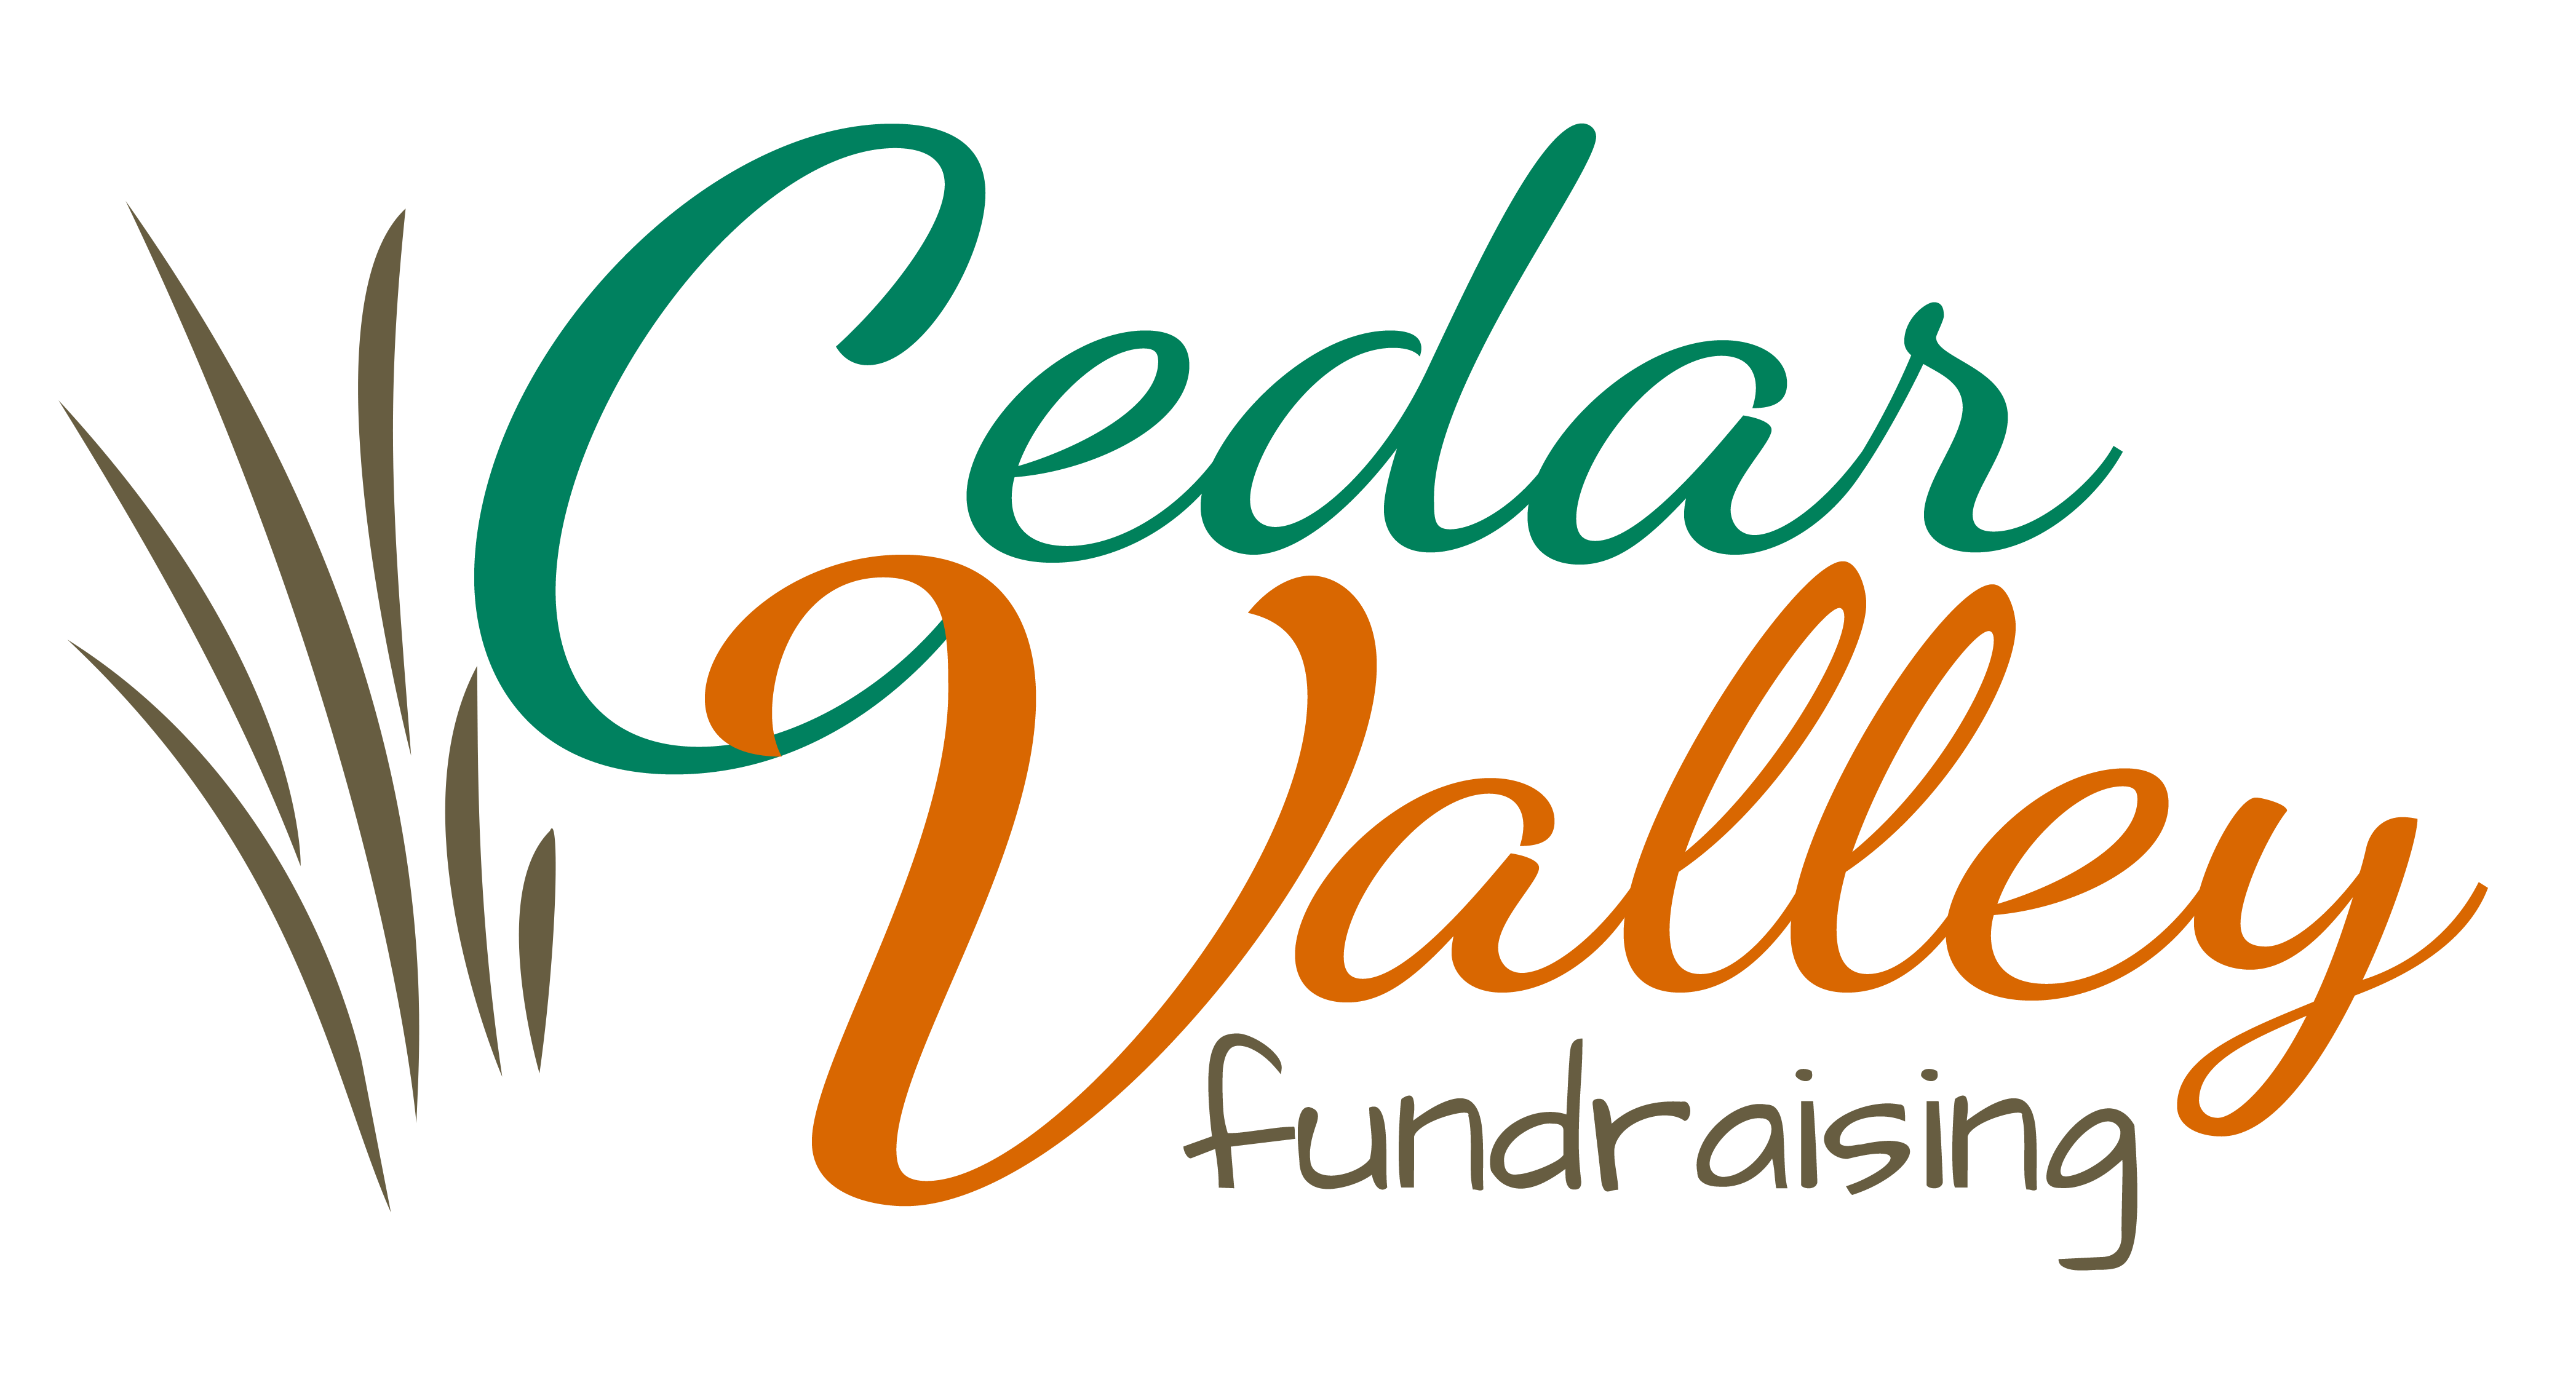 Classic breaks cedar valley. Fundraising clipart cookie dough fundraiser